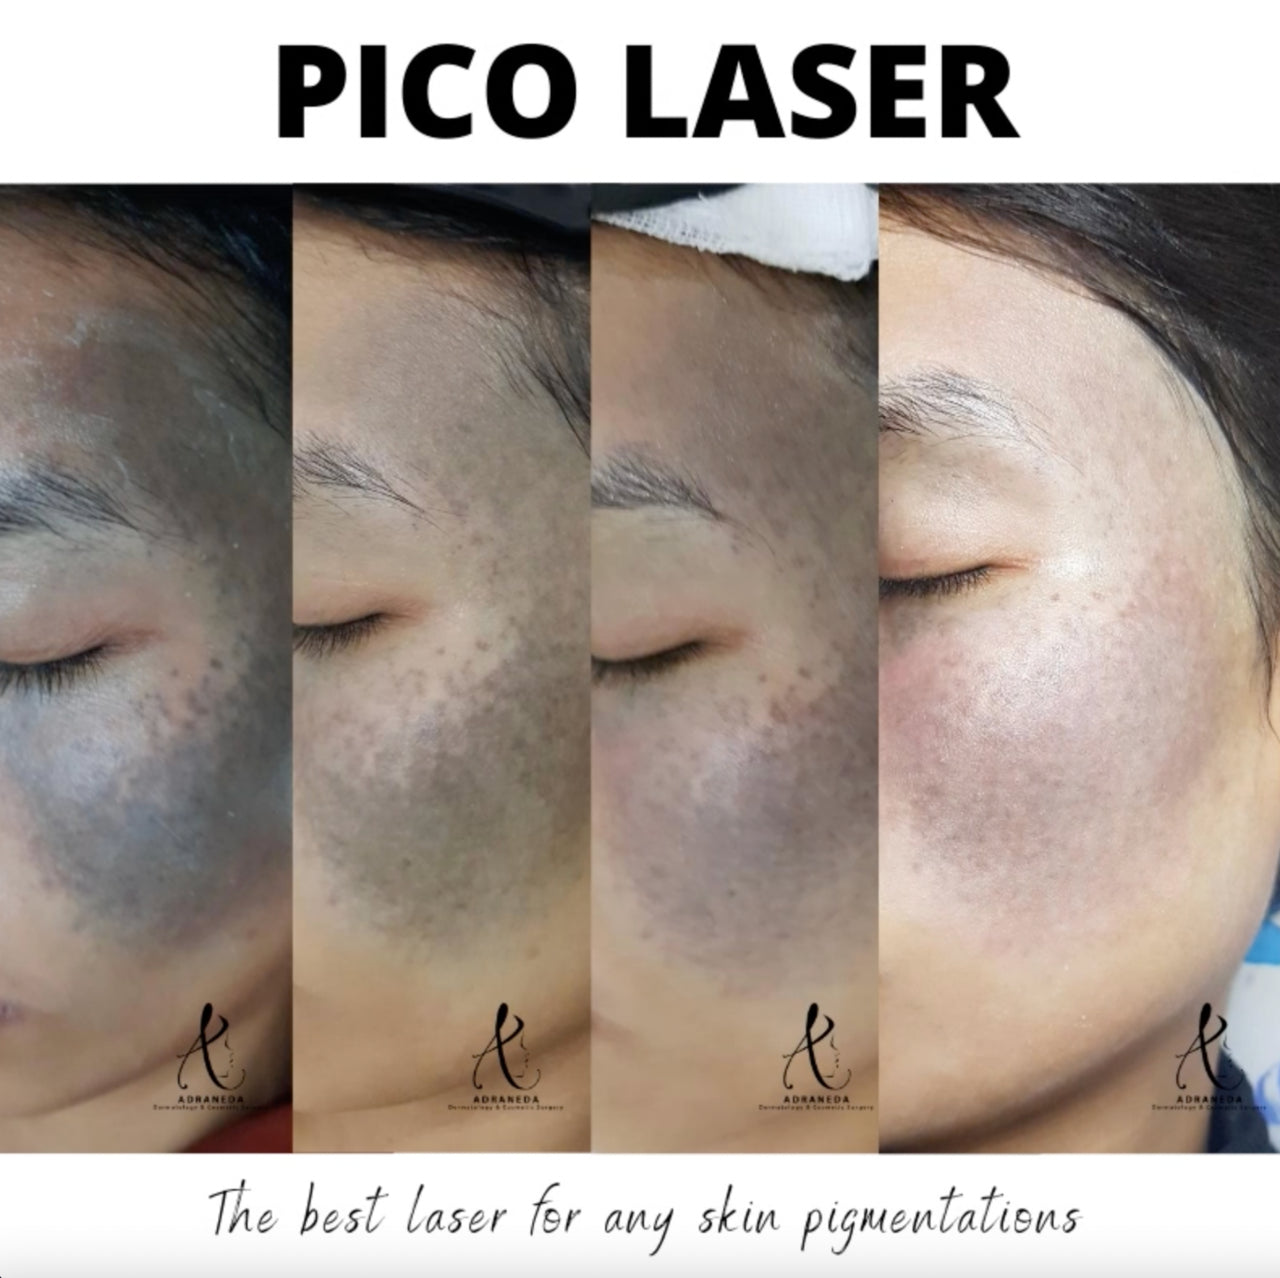 Pico laser, qs ndyag laser, freckles, melasma treatment, tattoo removal, birthmark removal, mole removal, acne marks, leg scars treatment